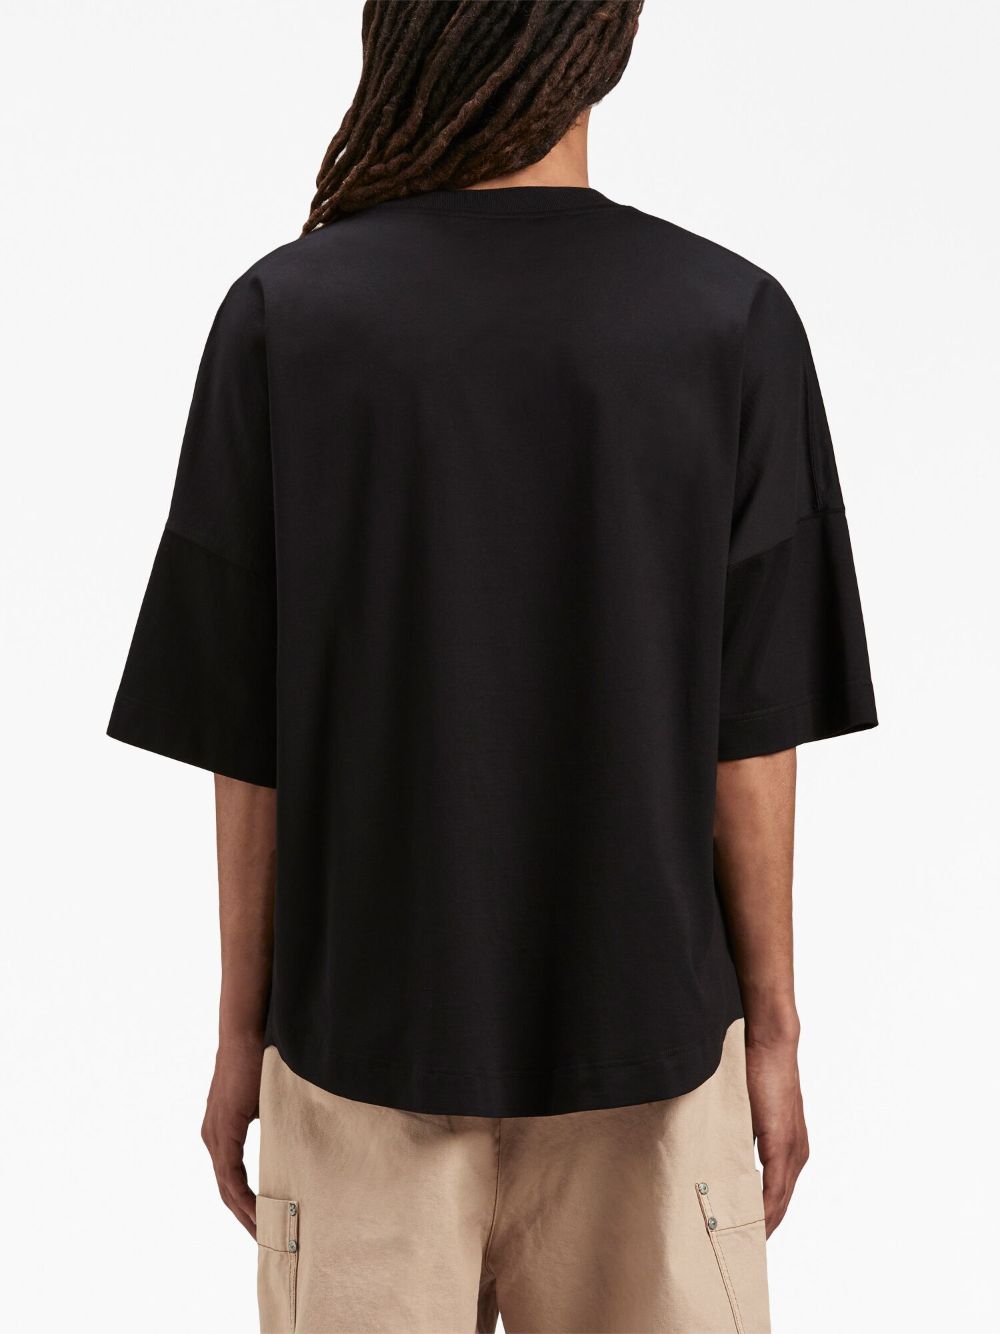 oversize black t-shirt